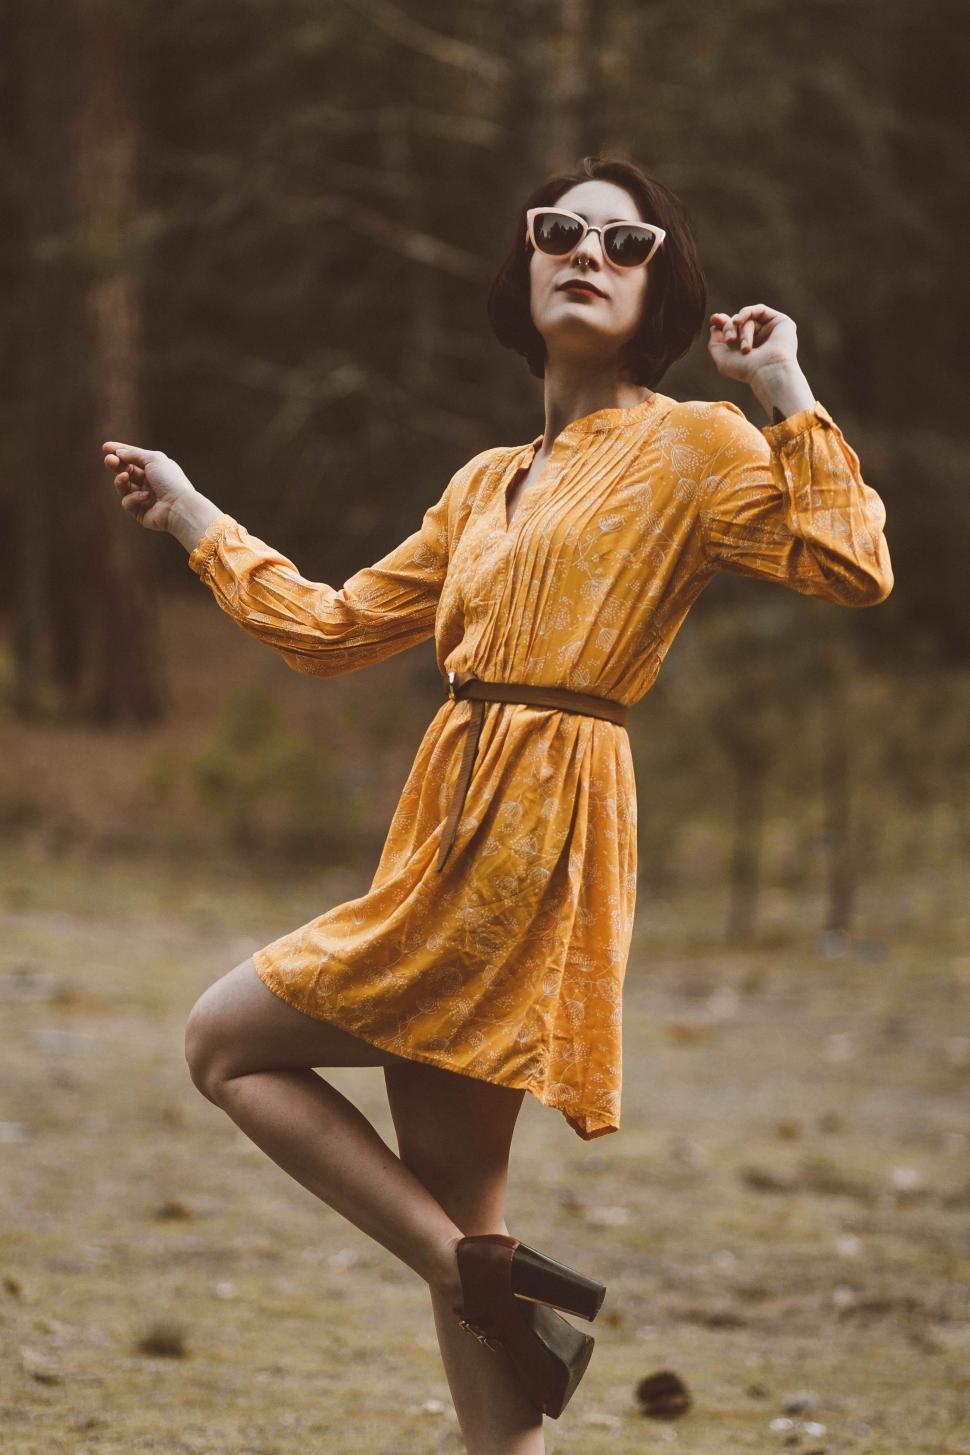 Free Image of Woman in Yellow Dress Dancing 